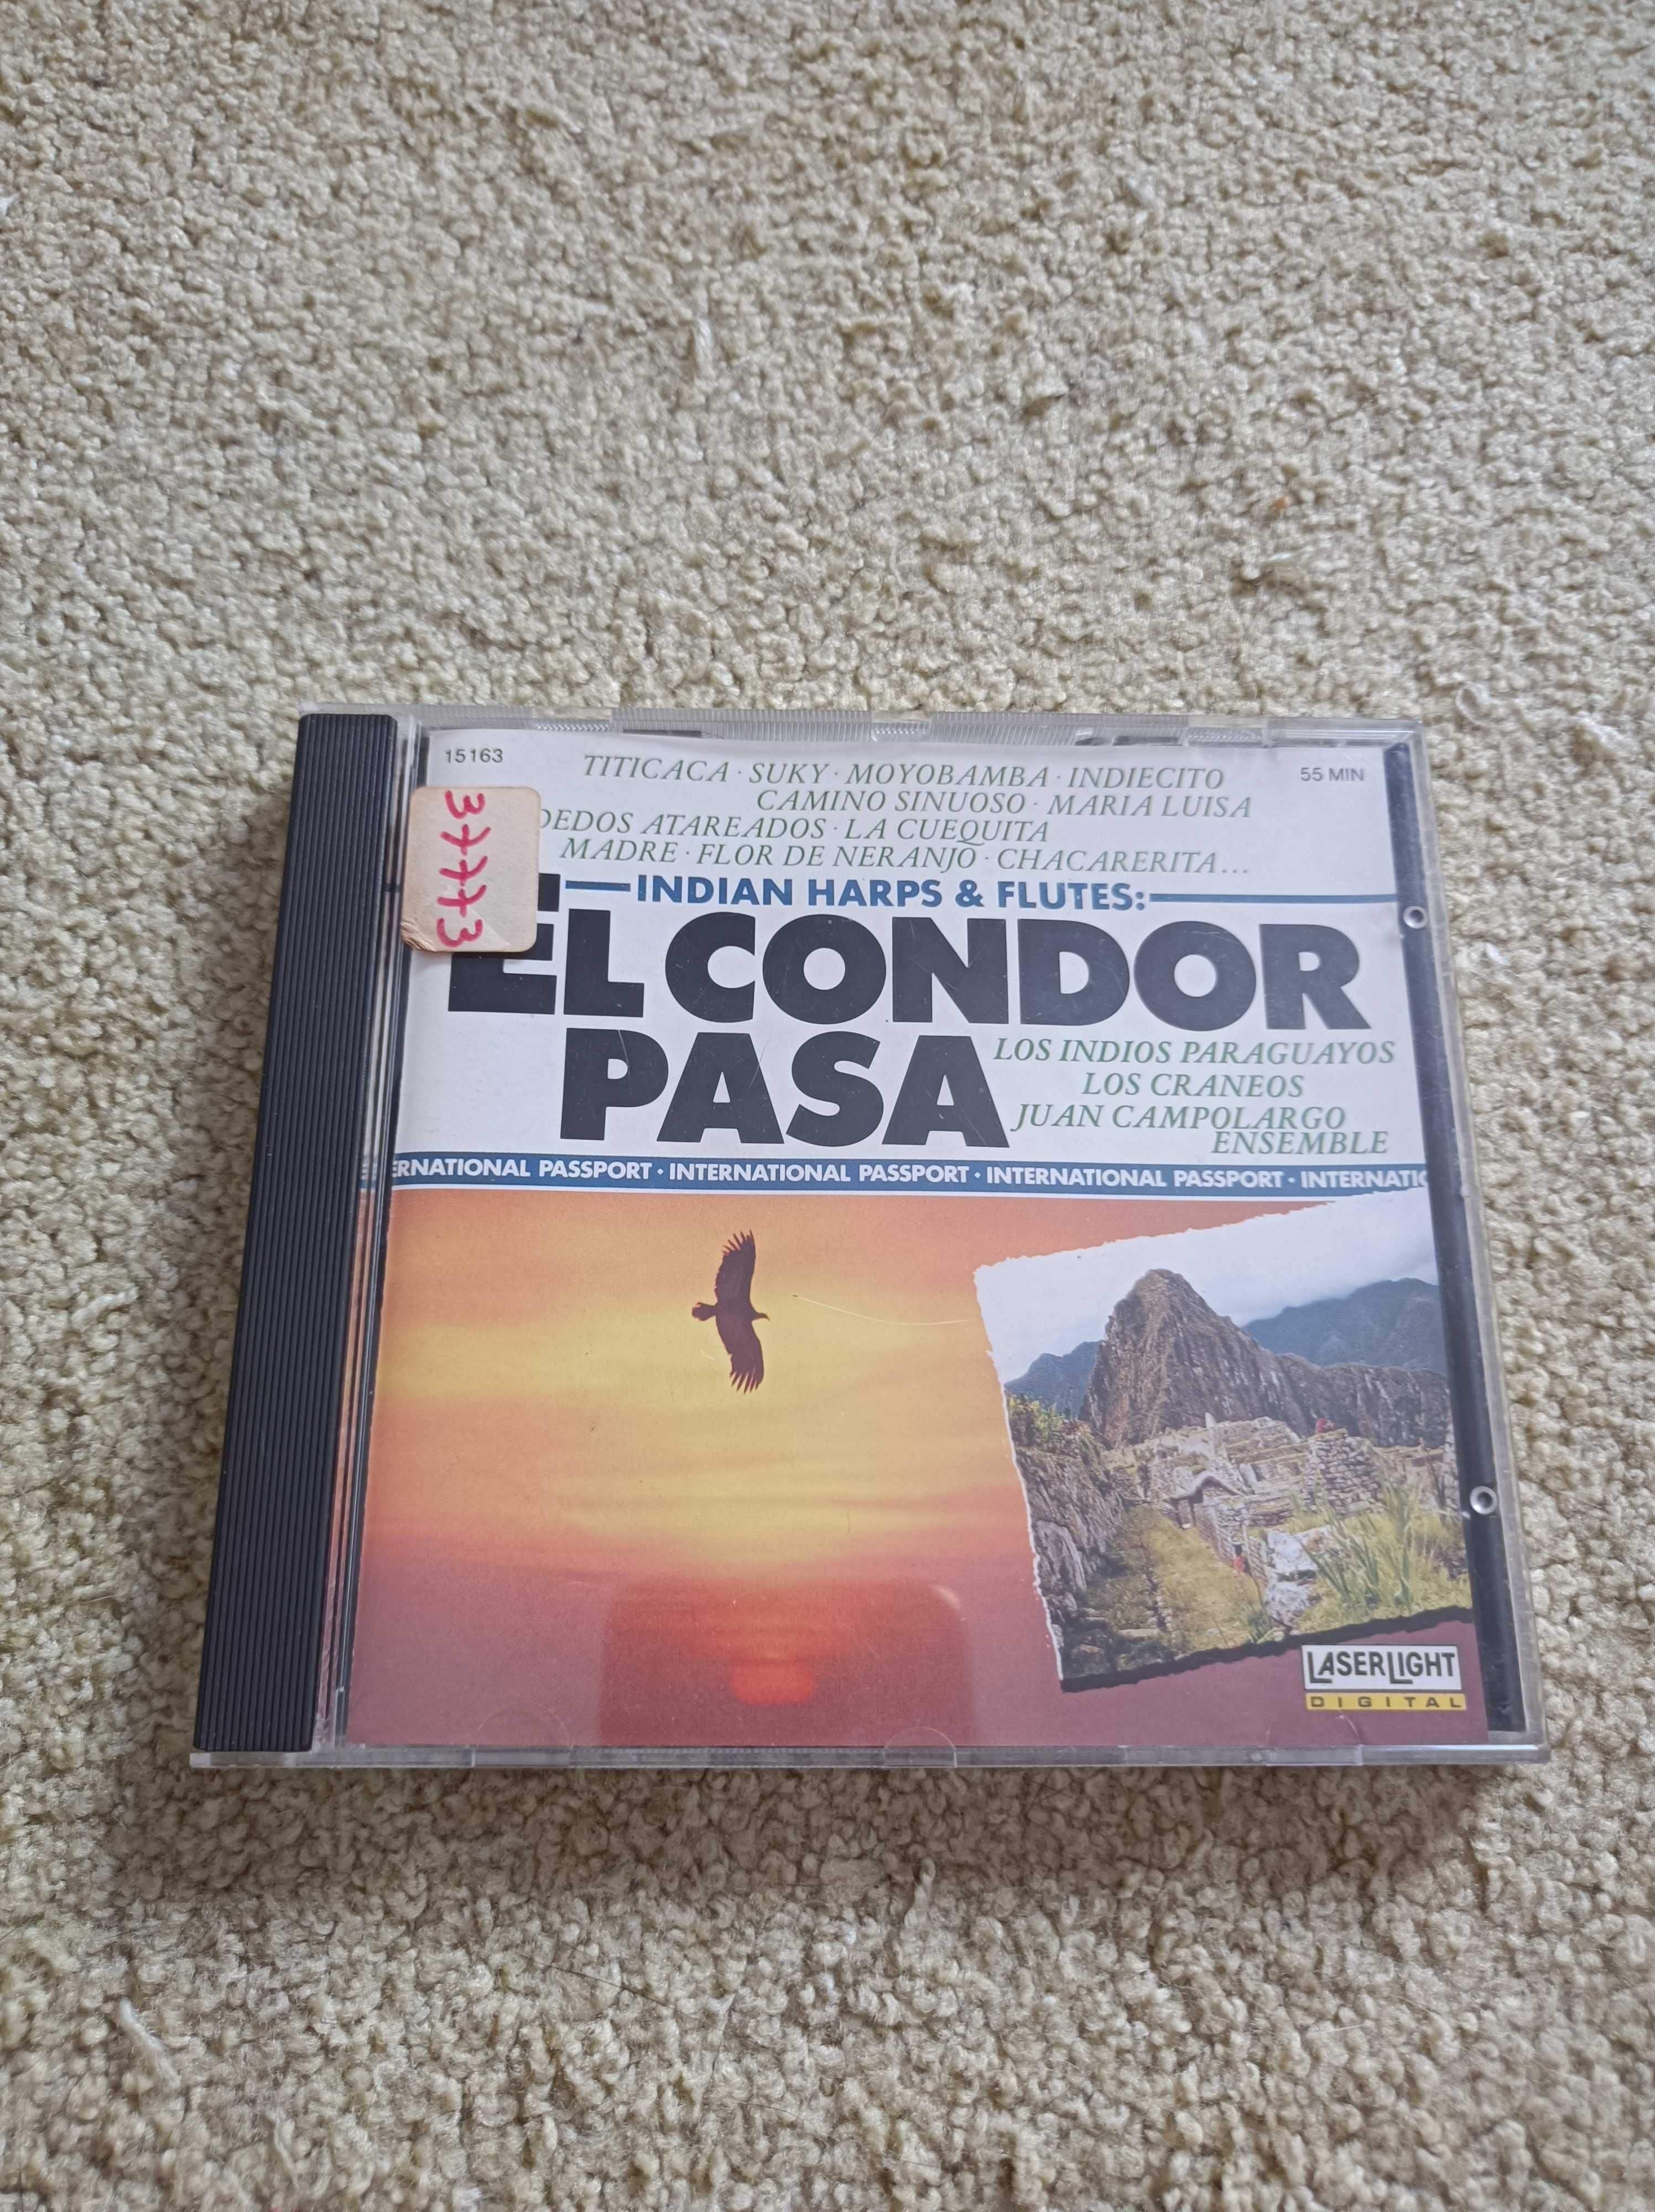 CDs Musica do Mundo - 5€/lote